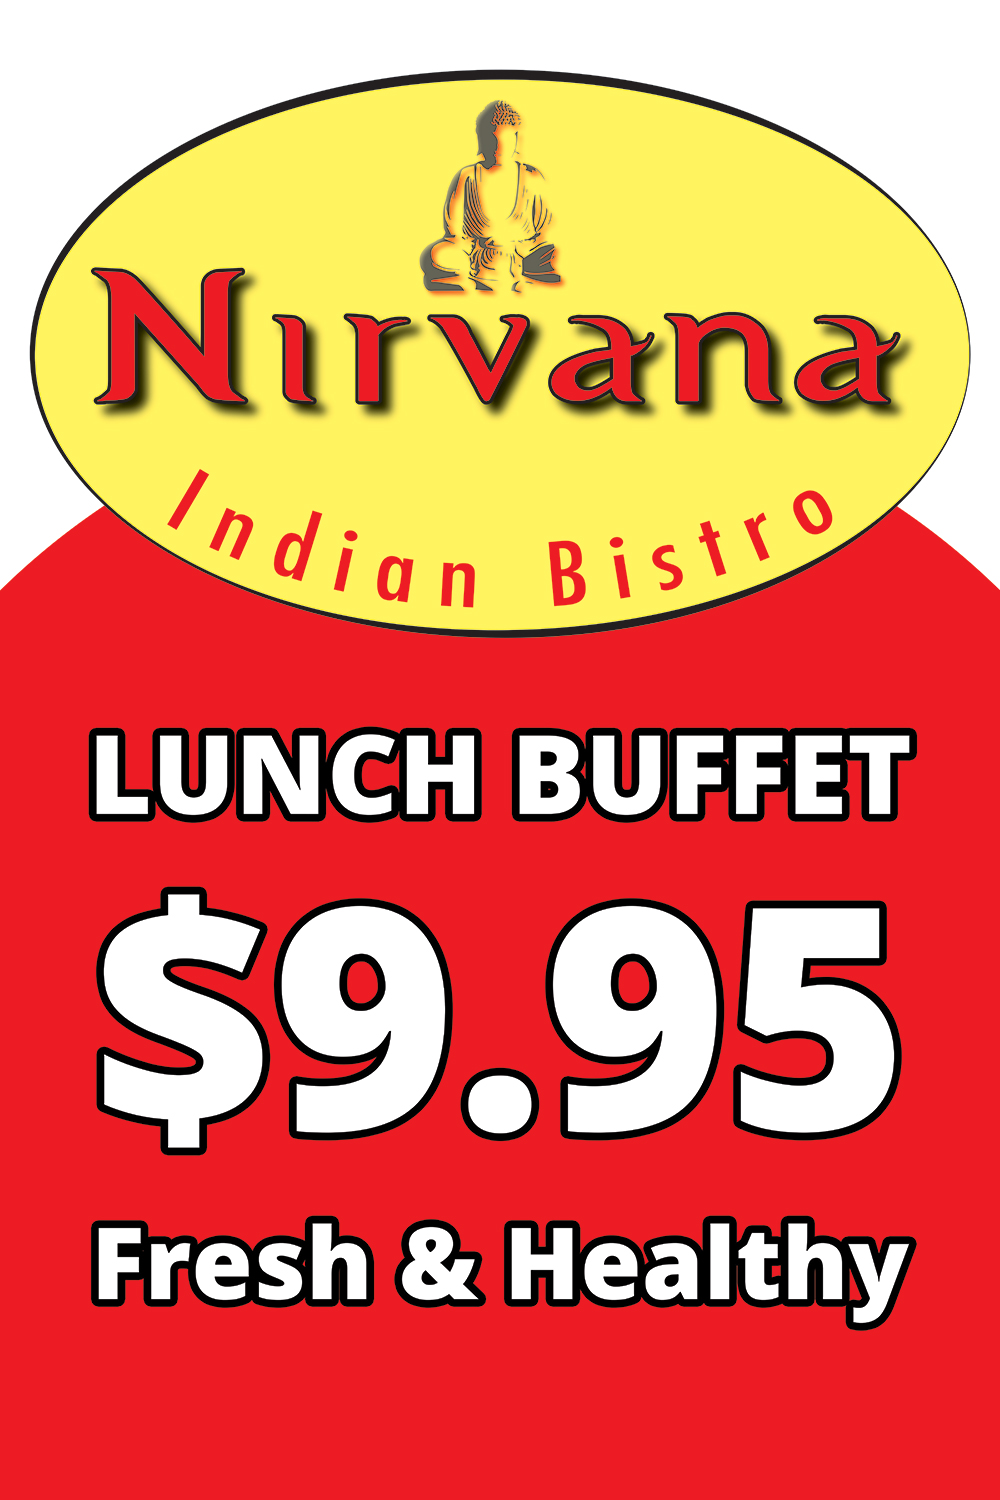 nirvana-bistro-logo-nabin-24x36-fresh-and-healthy995-flat.jpg